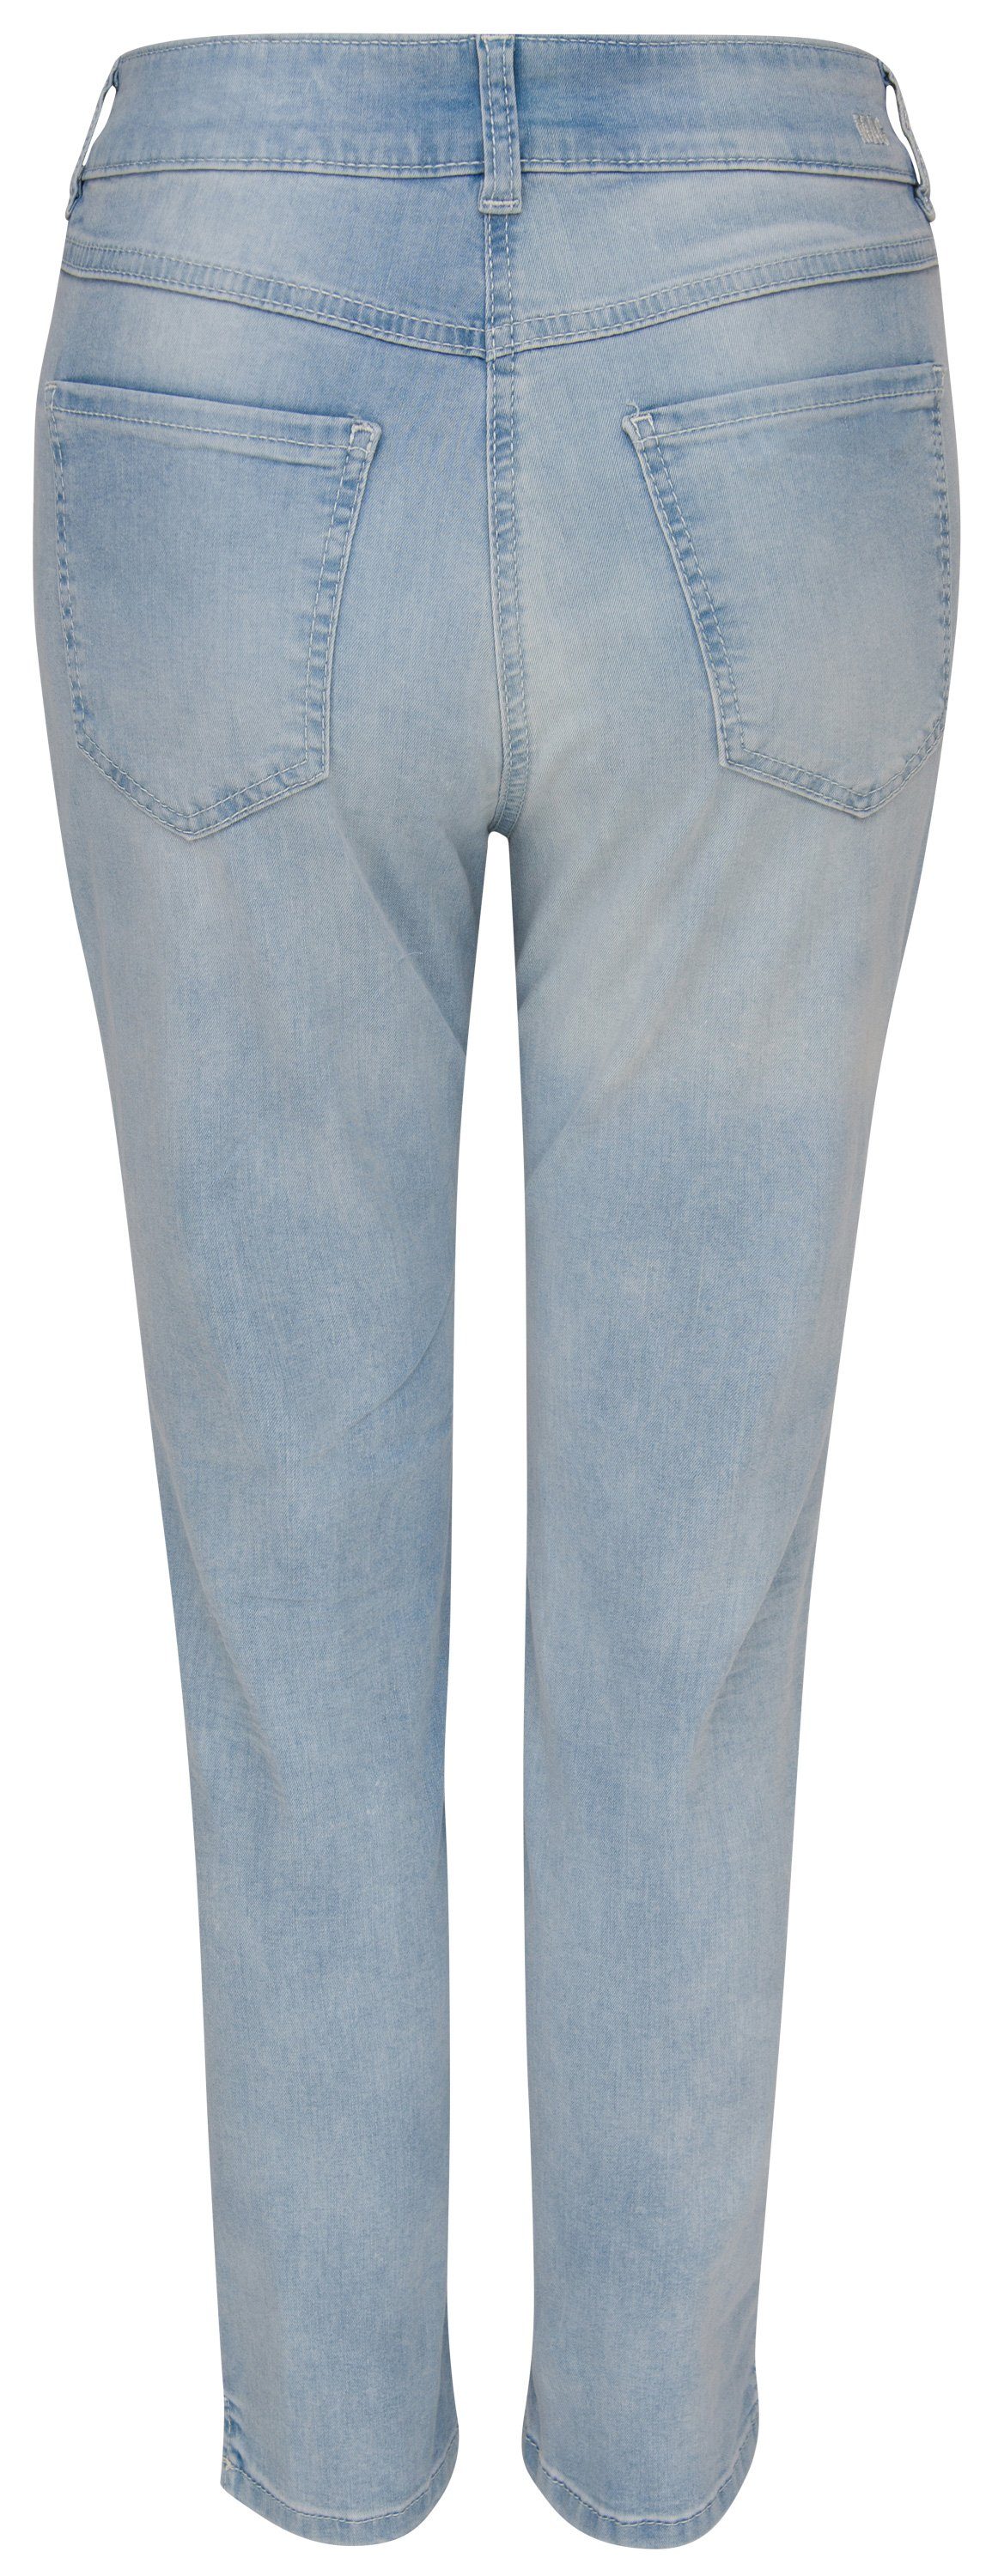 batic D130 light Stretch-Jeans 5260-90-0394 7/8 ANGELA blue MAC MAC bleached SUMMER